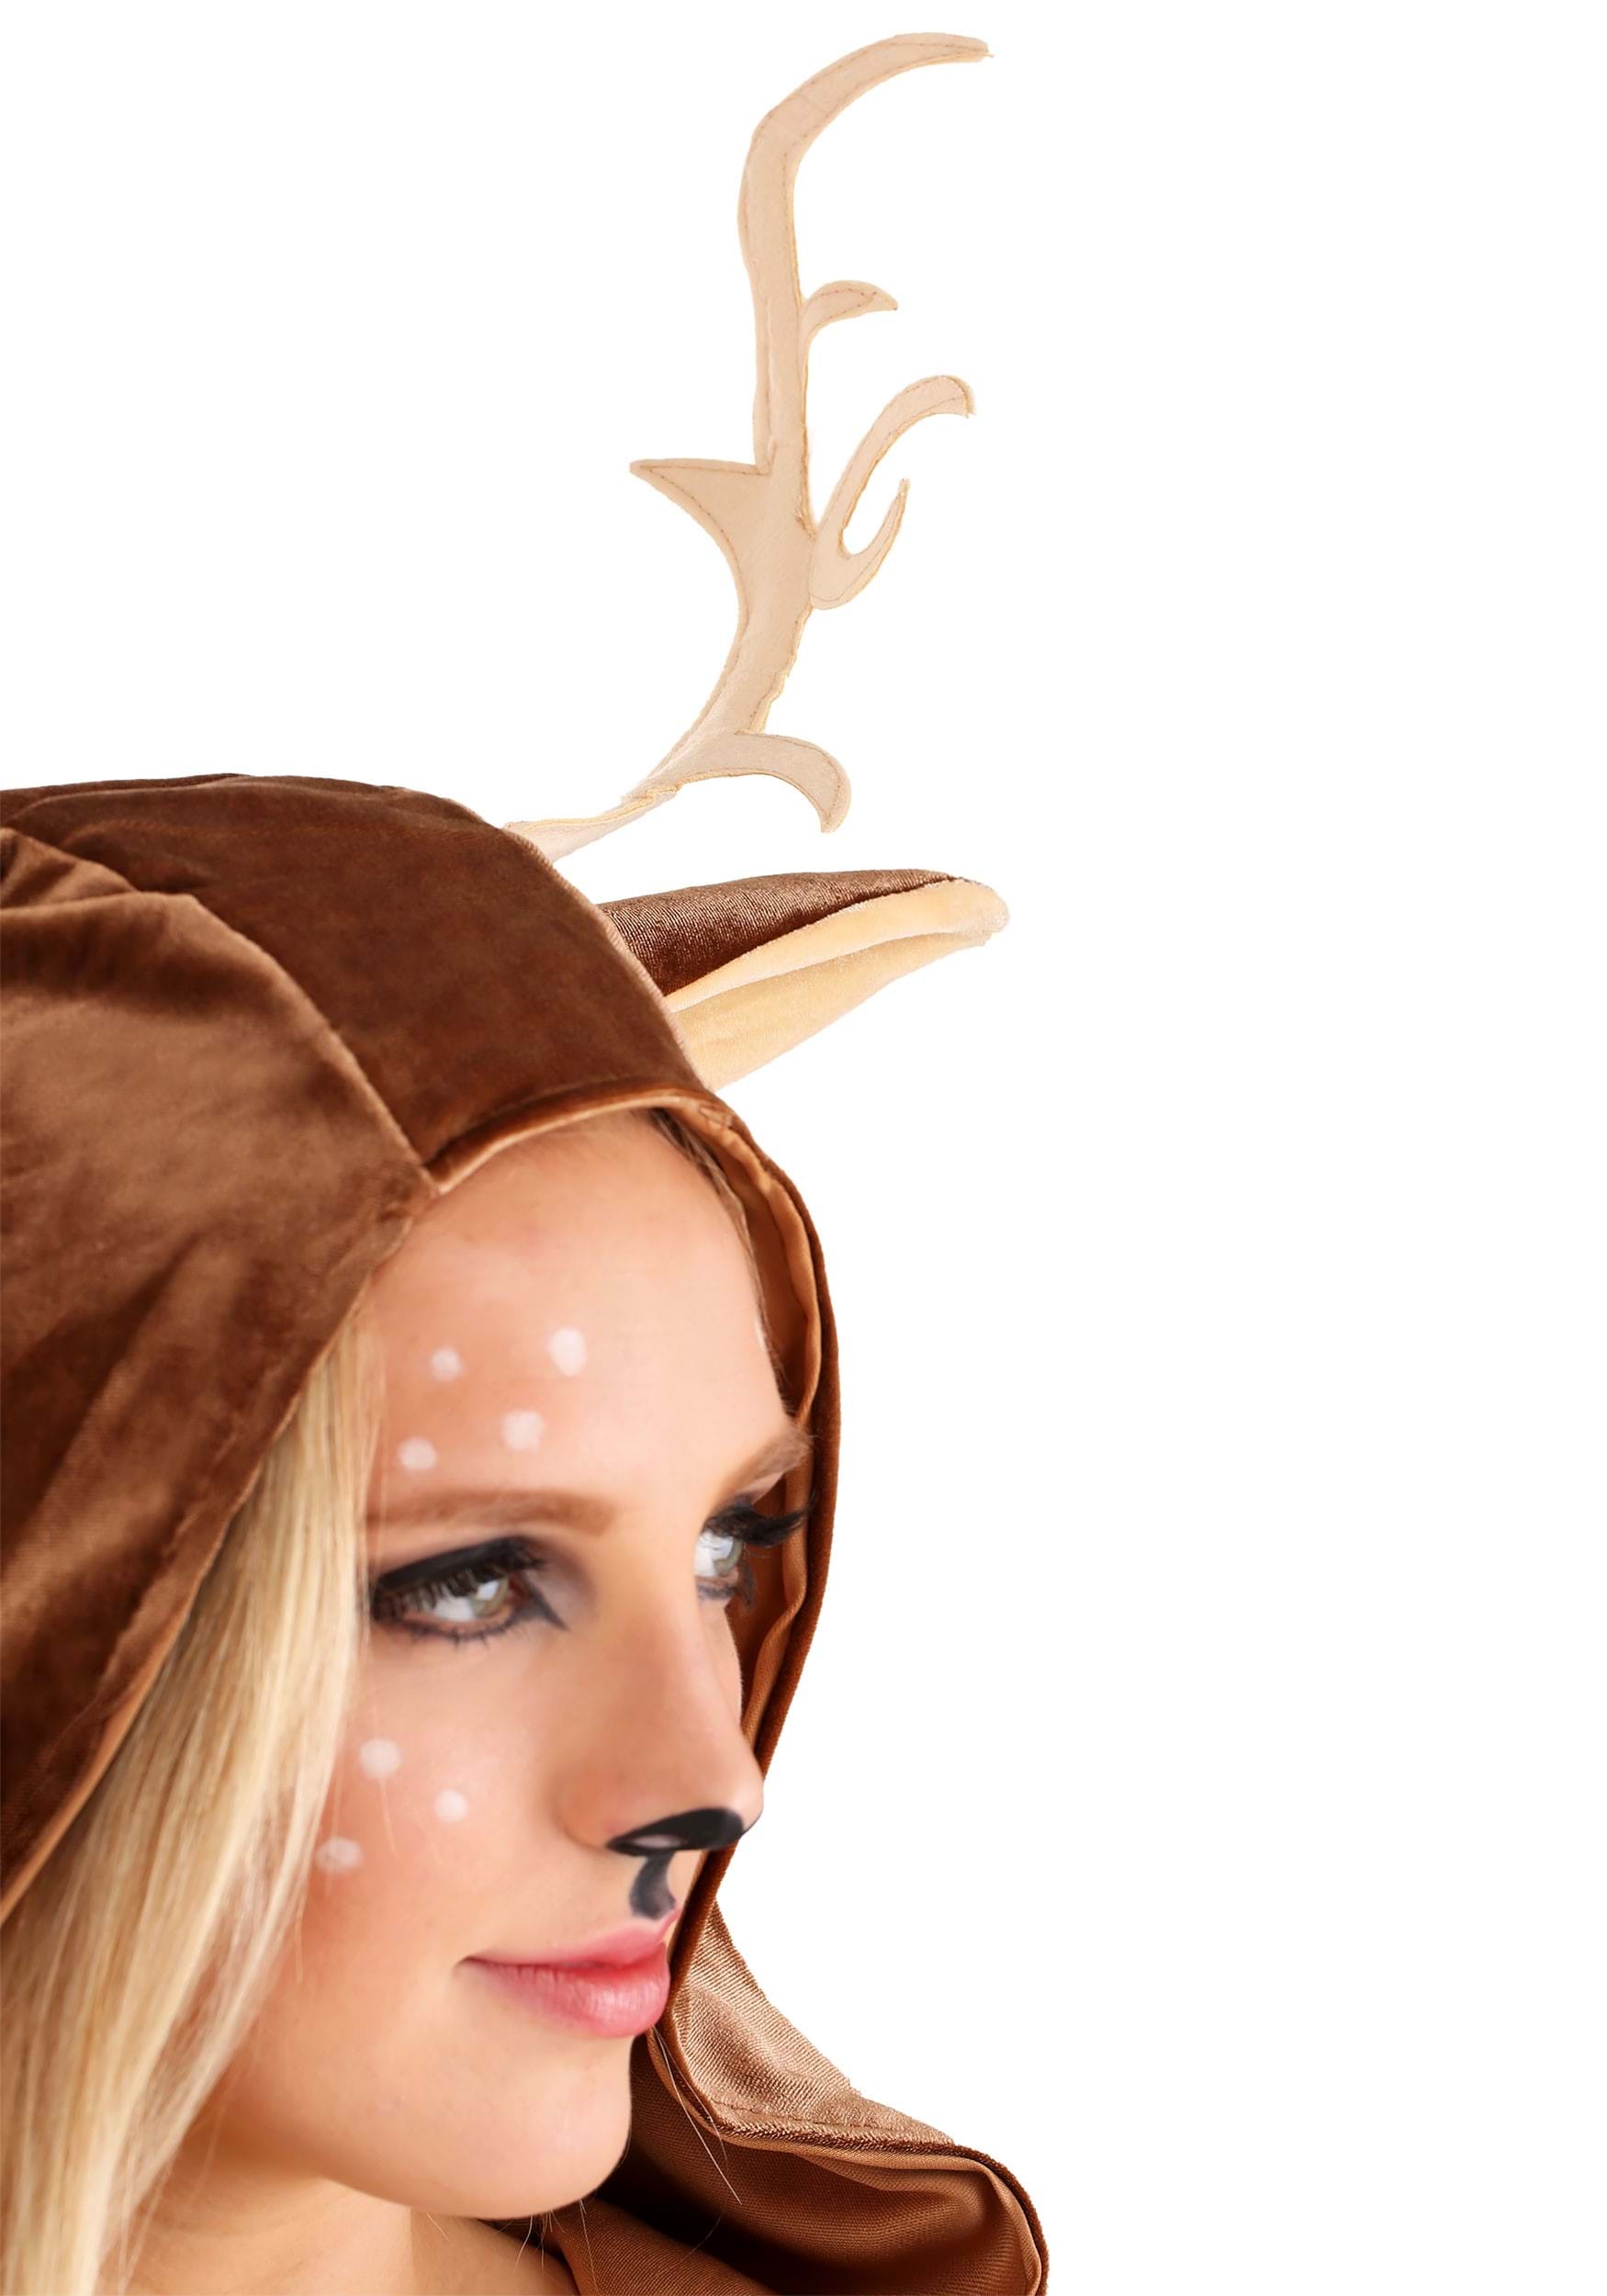 Women's Deer Fawn Plus Size Costume